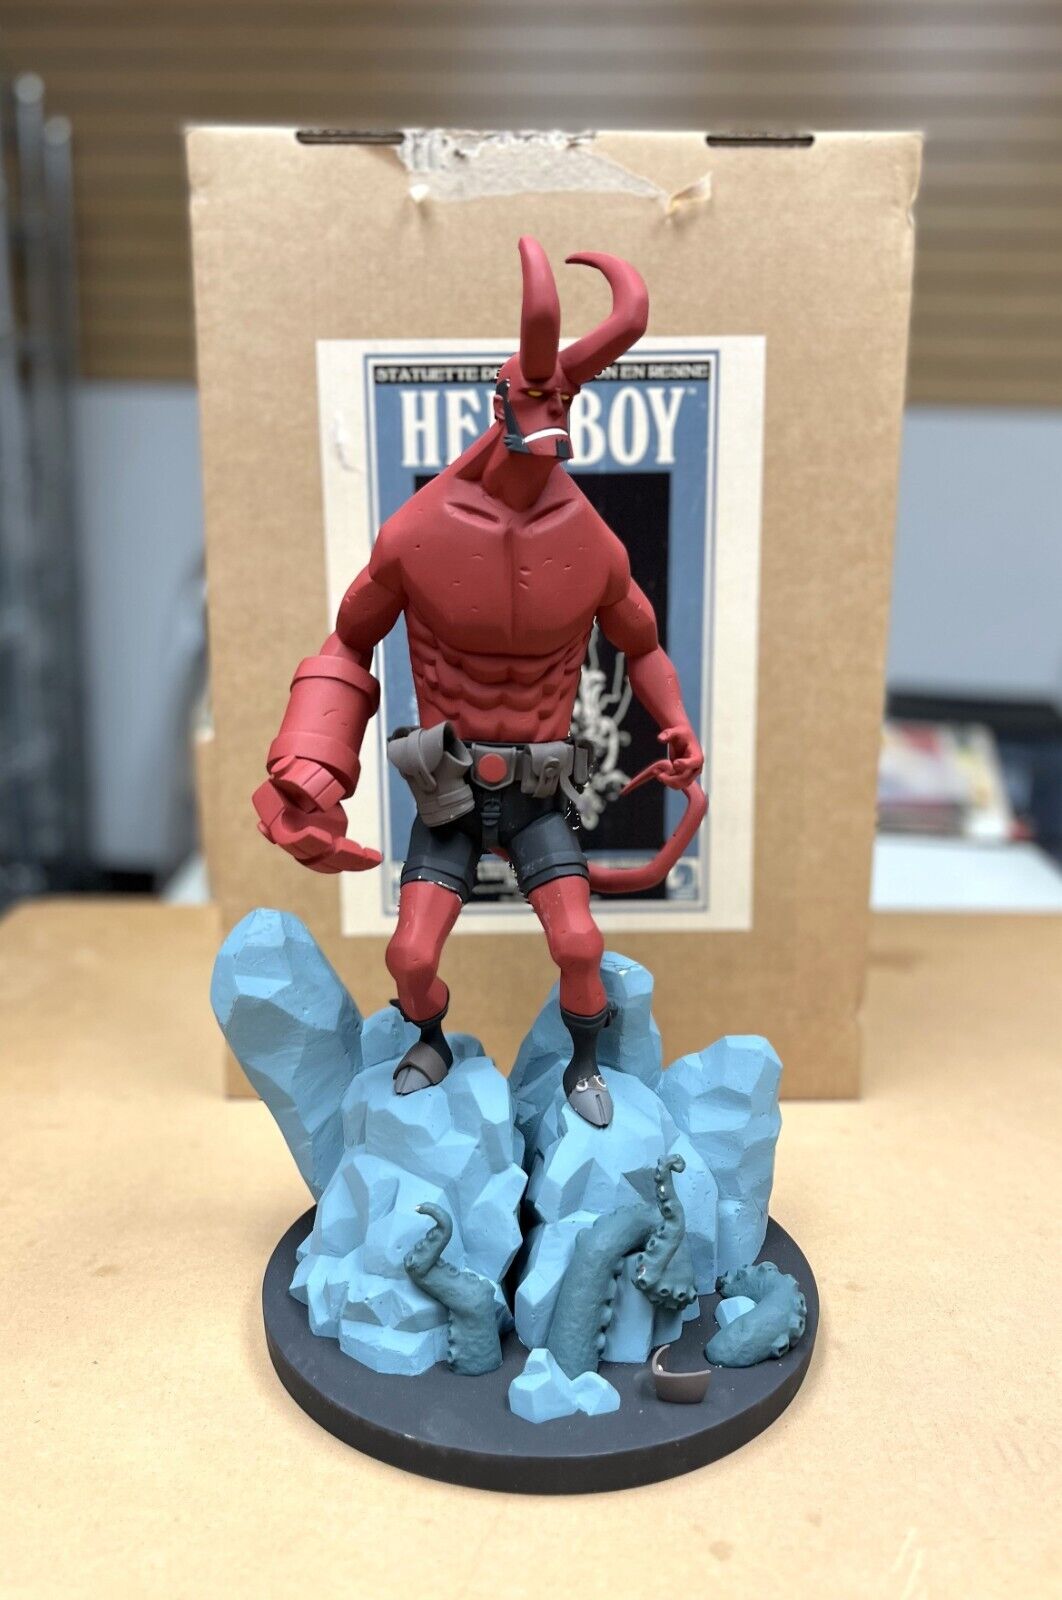 Fariboles Mike Mignola's Hellboy statue limited to 300 boxed